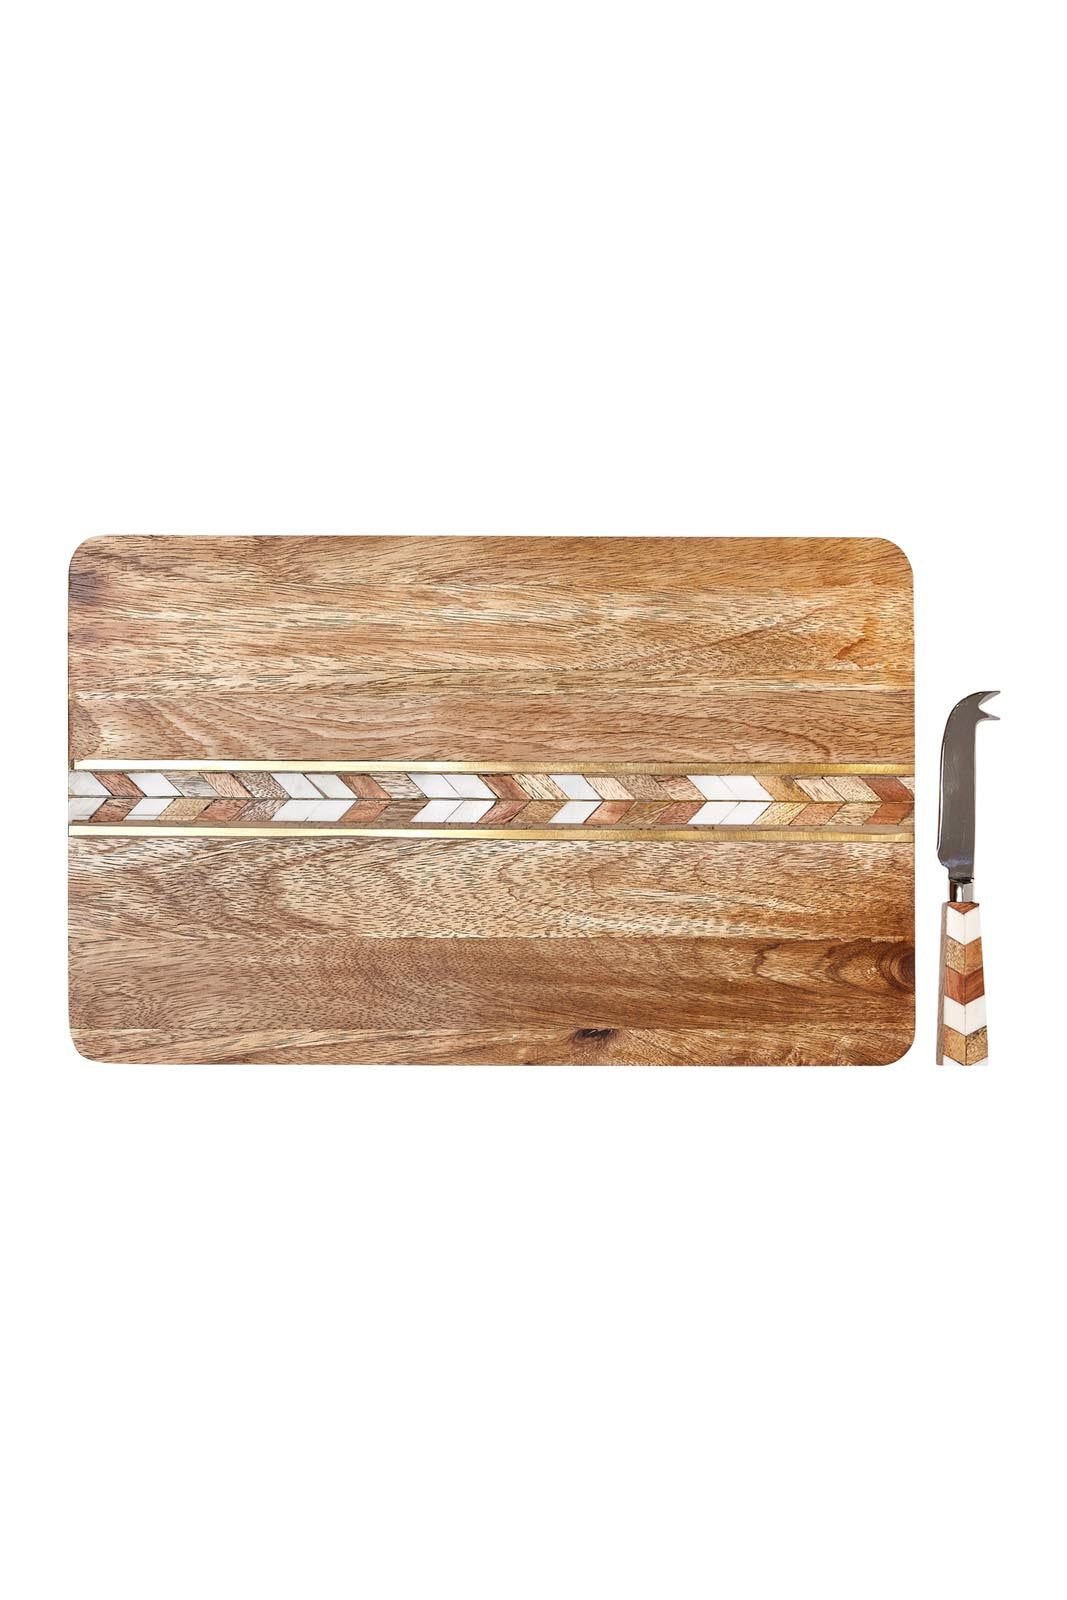 Studio Arrow Board Set - Wood - eb&ive Table Top